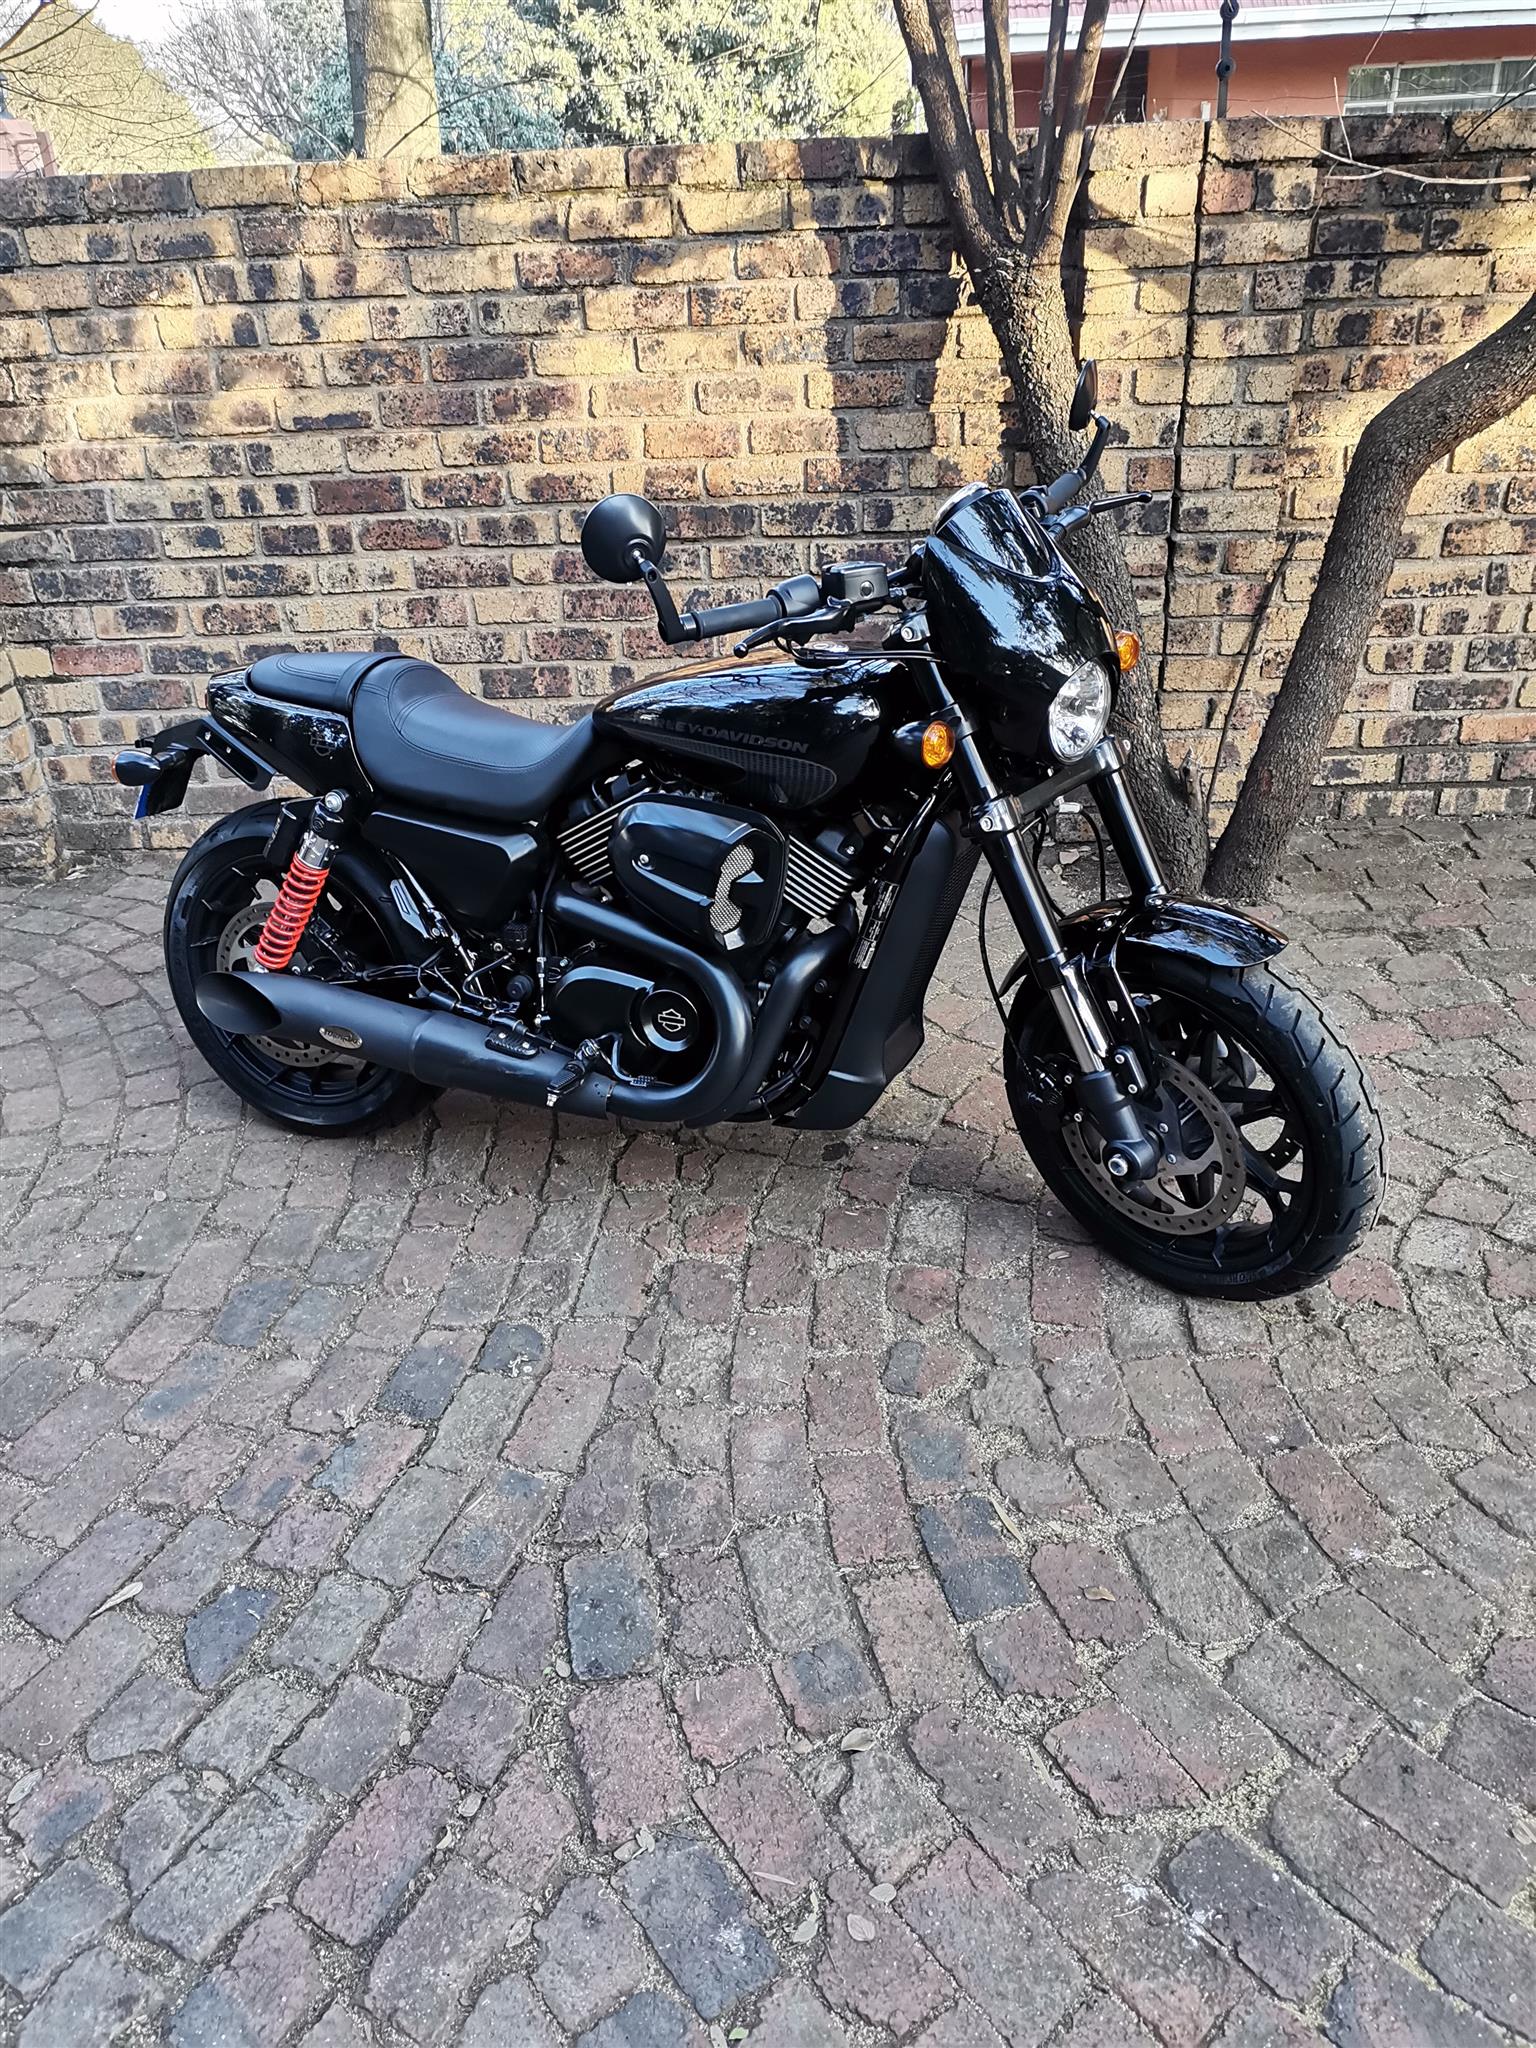 2020 Harley Street 750. Tags- Yamaha r1 883 Suzuki gsx Honda cbr 1000 Ducati